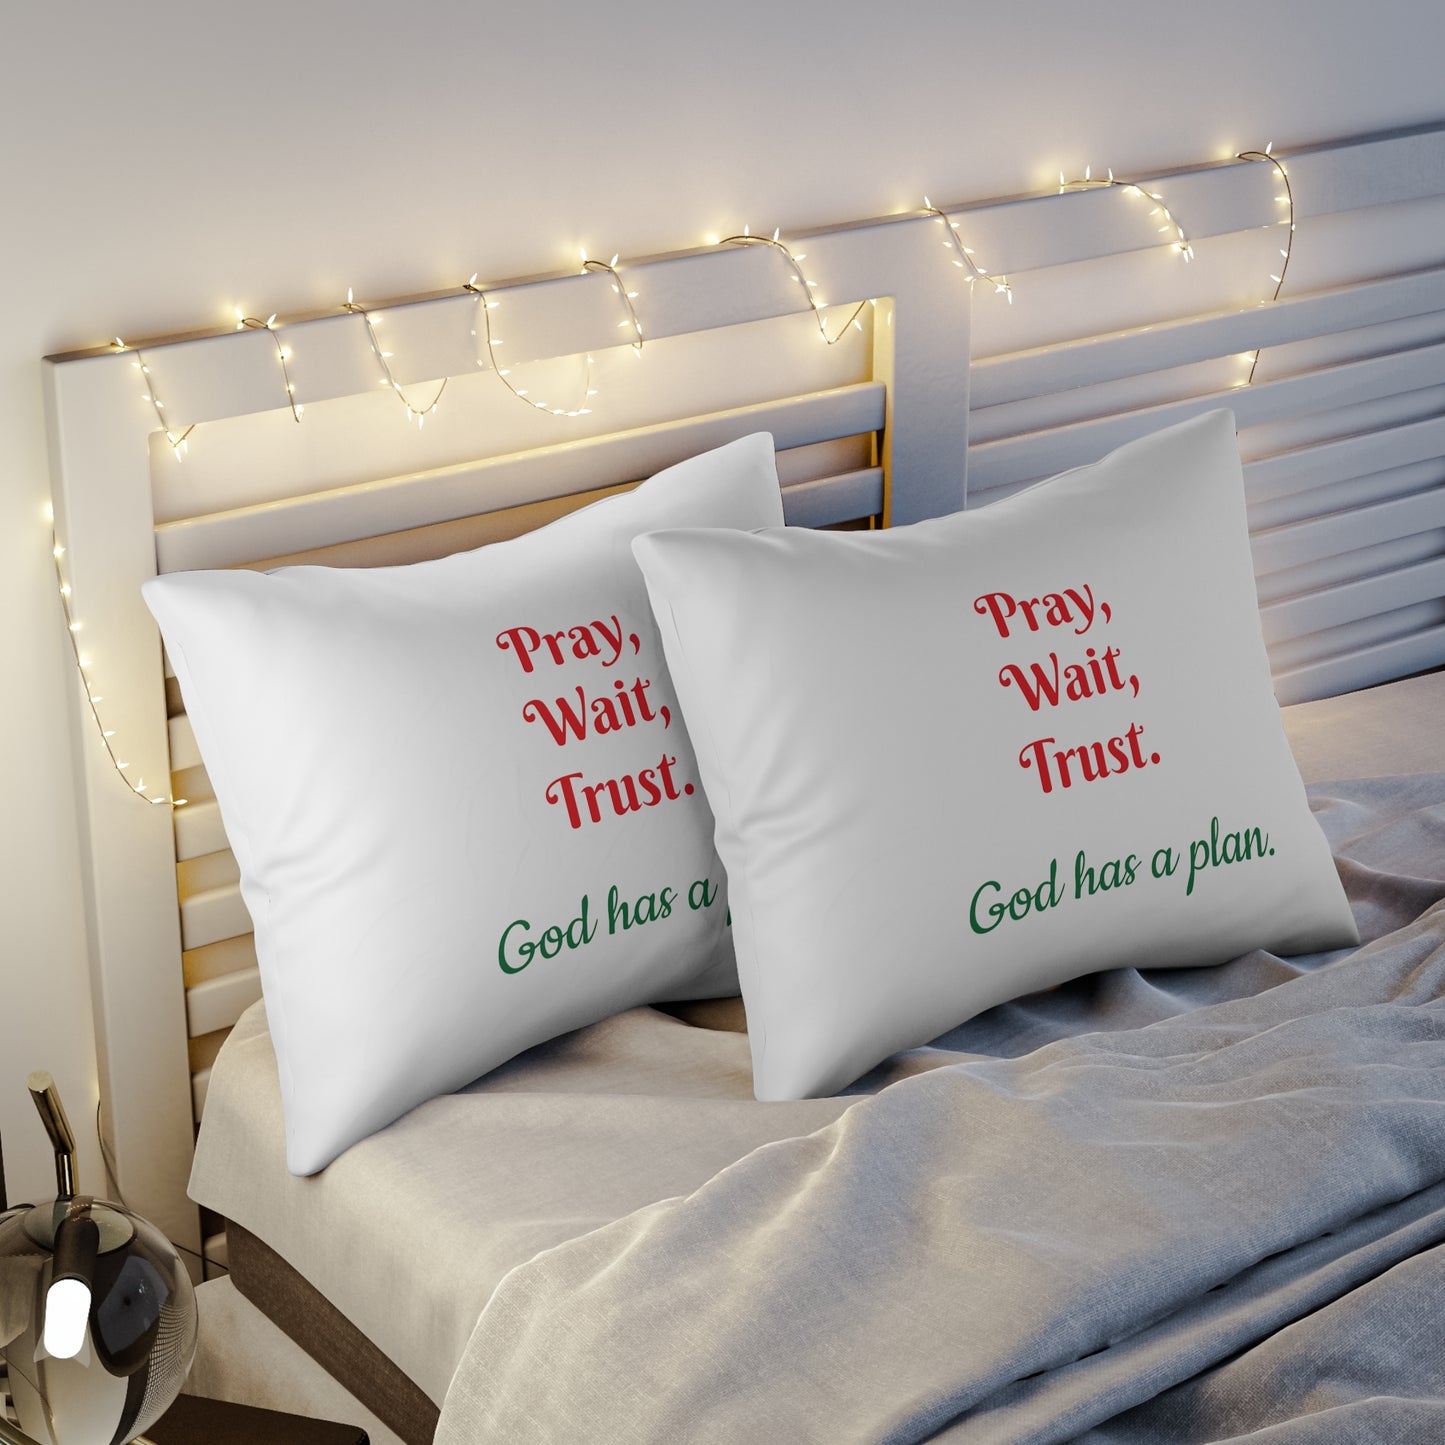 Pillow Sham for Christmas Pray Wait Trust God has a plan Red & Green Letter Pillow Sham